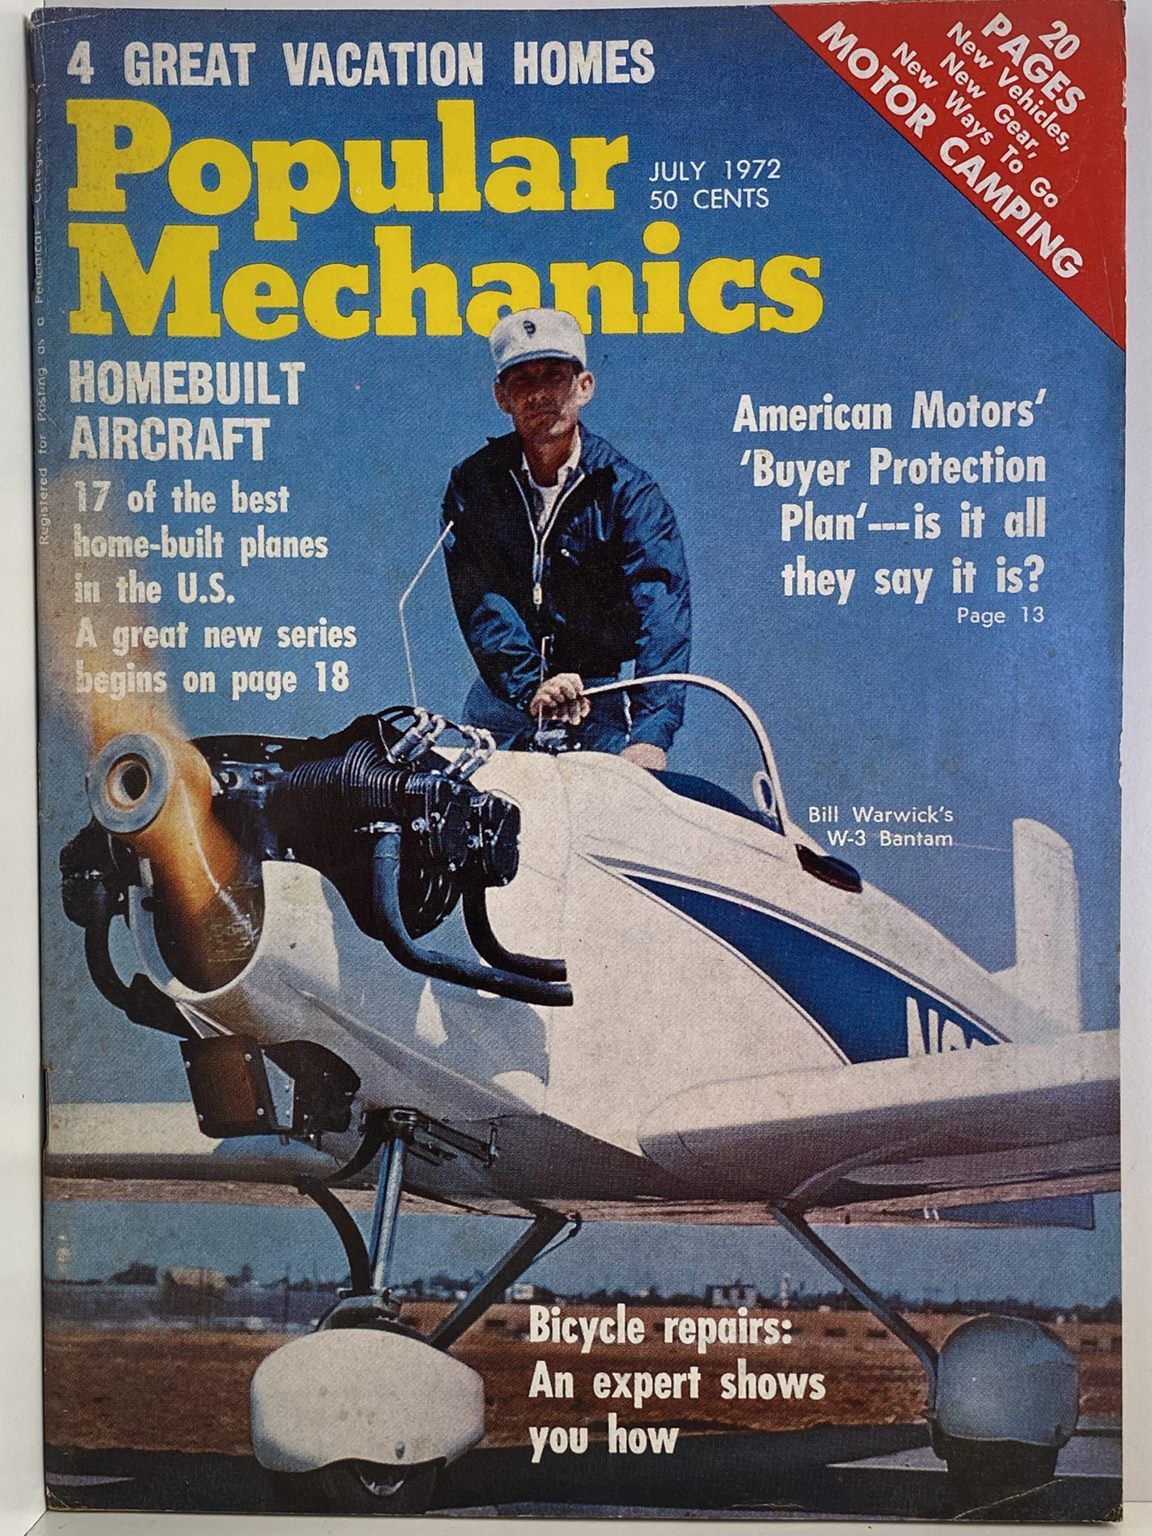 VINTAGE MAGAZINE: Popular Mechanics - Vol. 137, No. 5 - July 1972